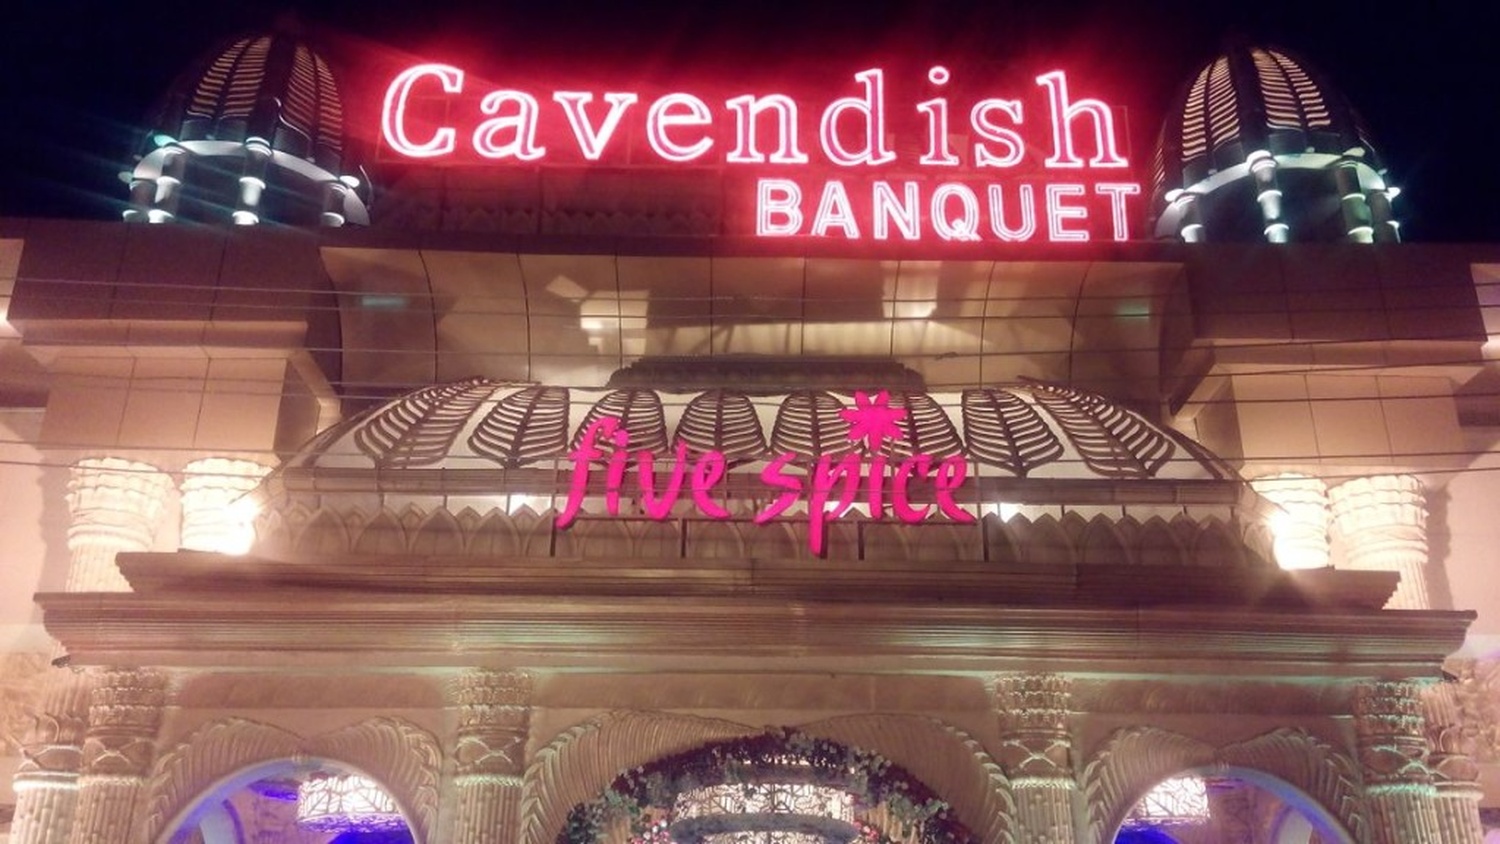 Cavendish Banquet|Wedding Planner|Event Services